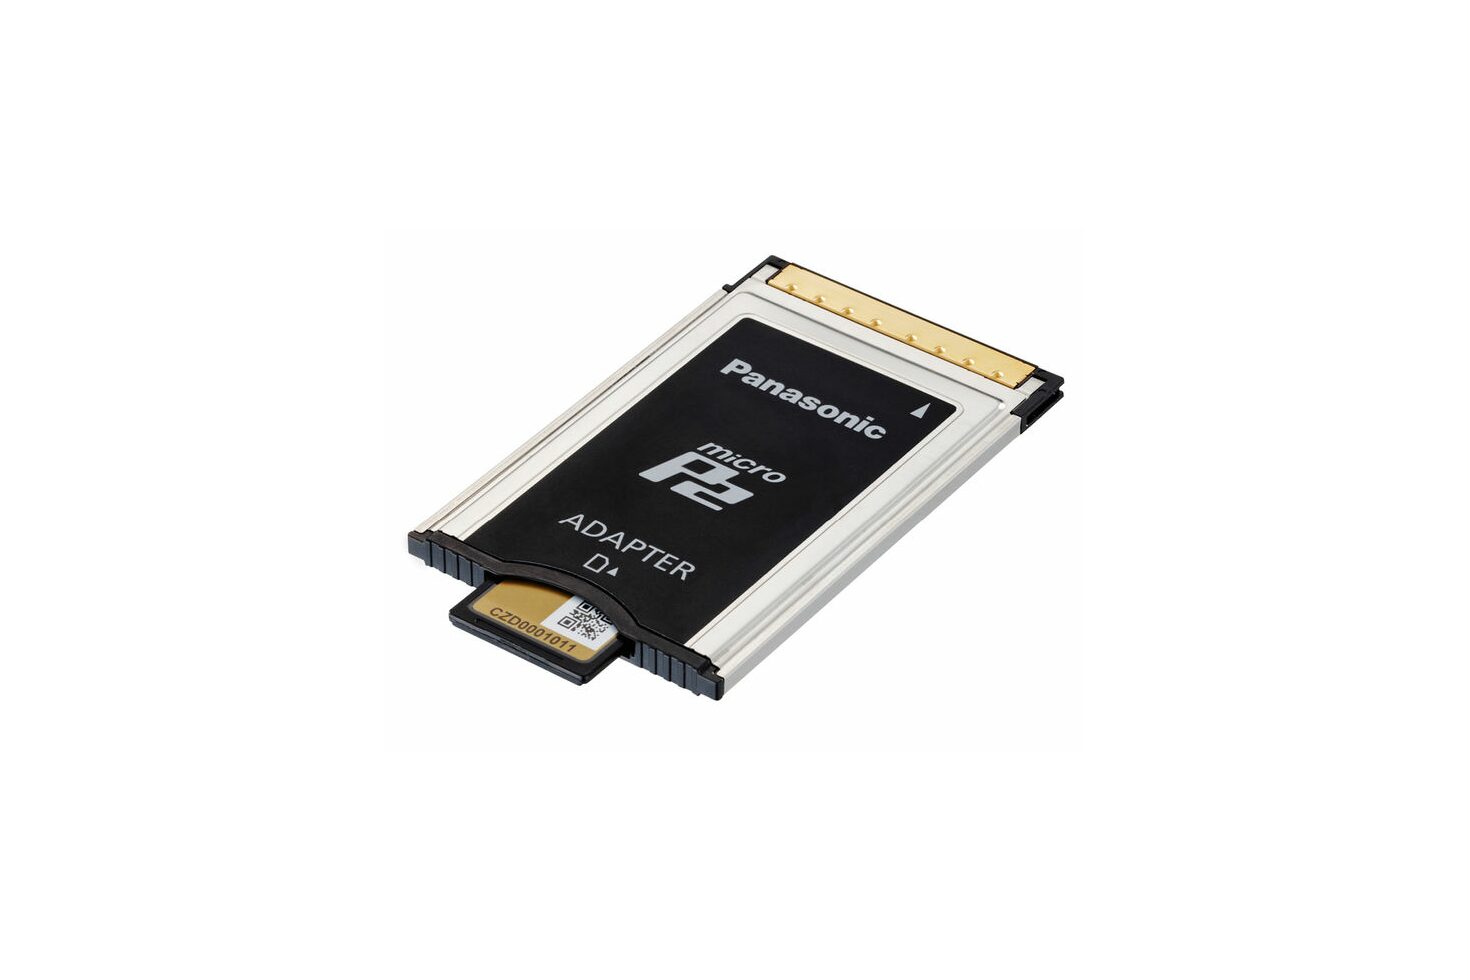 AJ-P2AD1G Image microP2 Memory Card Adapter